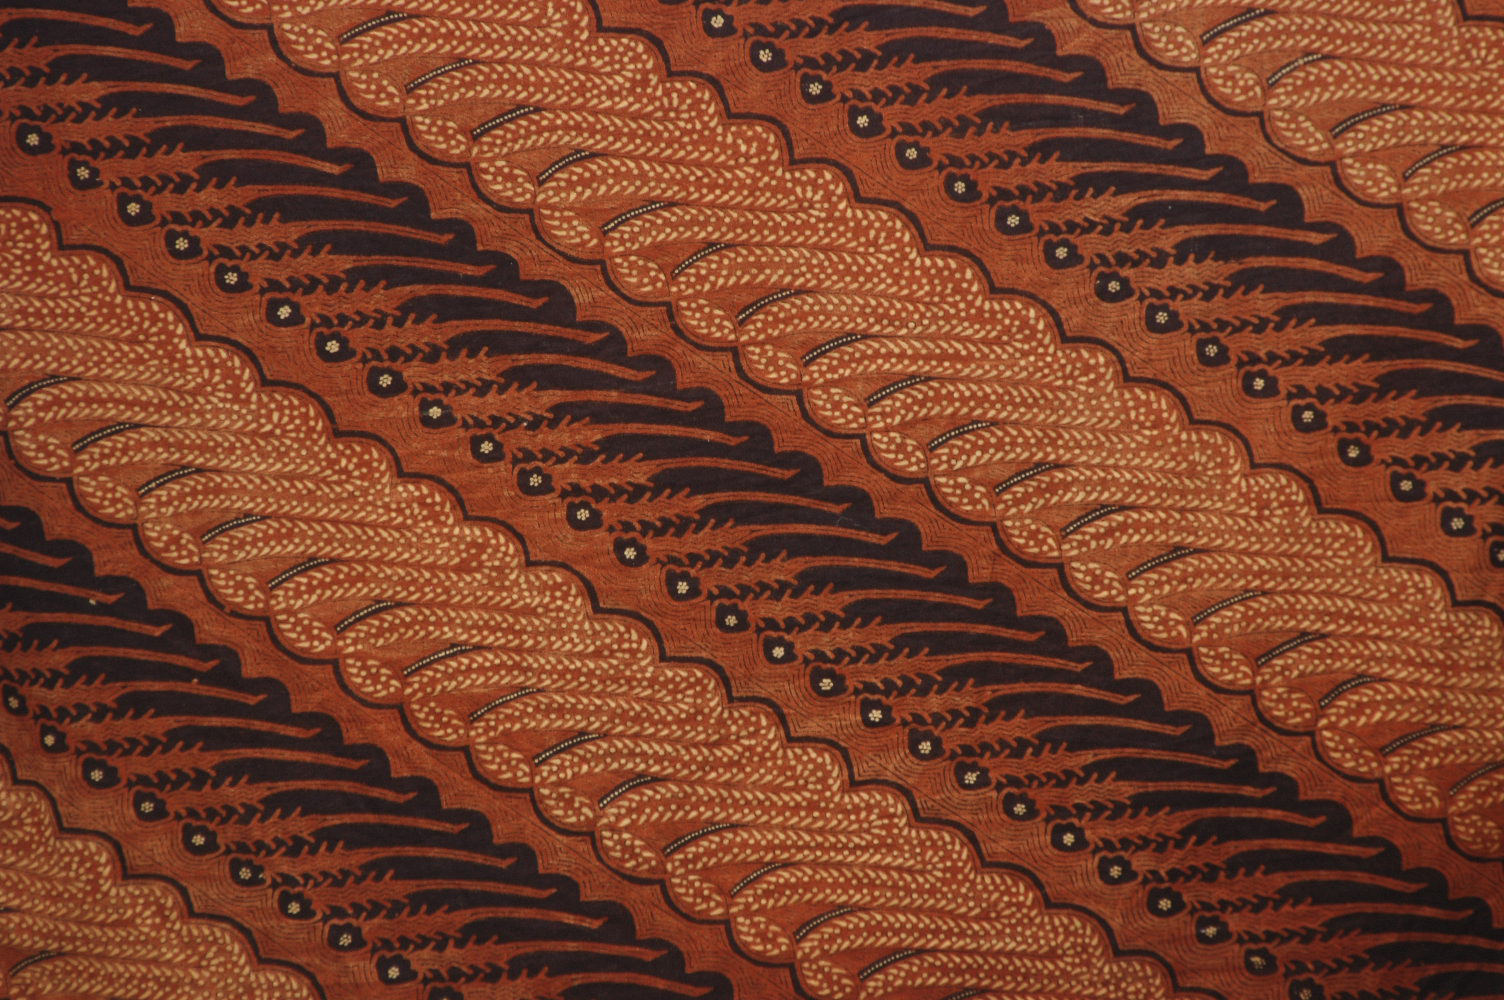 wallpaper warna coklat,brown,pattern,orange,design,textile